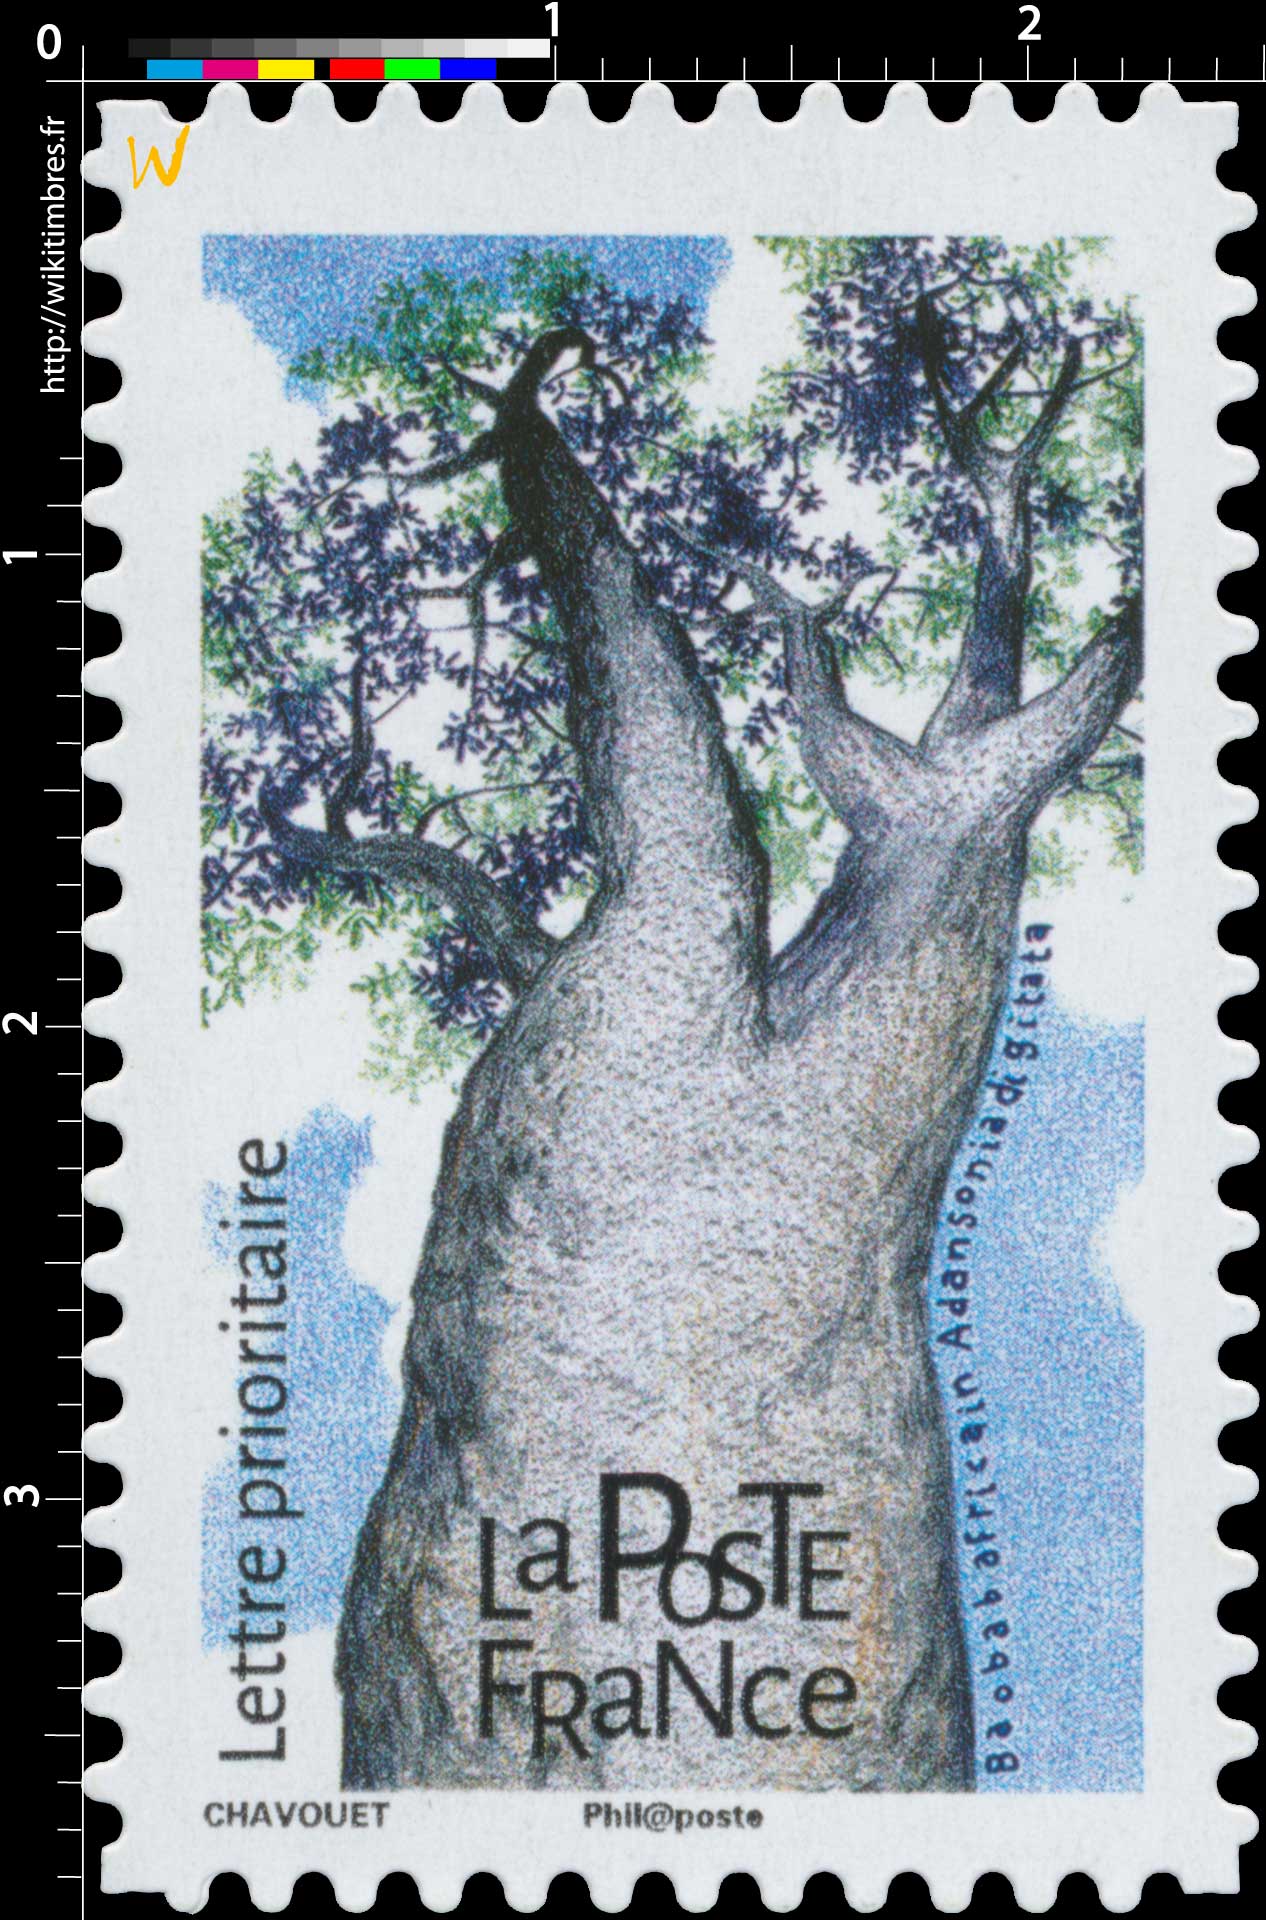 2018 Baobab africain - Adansonia digitata